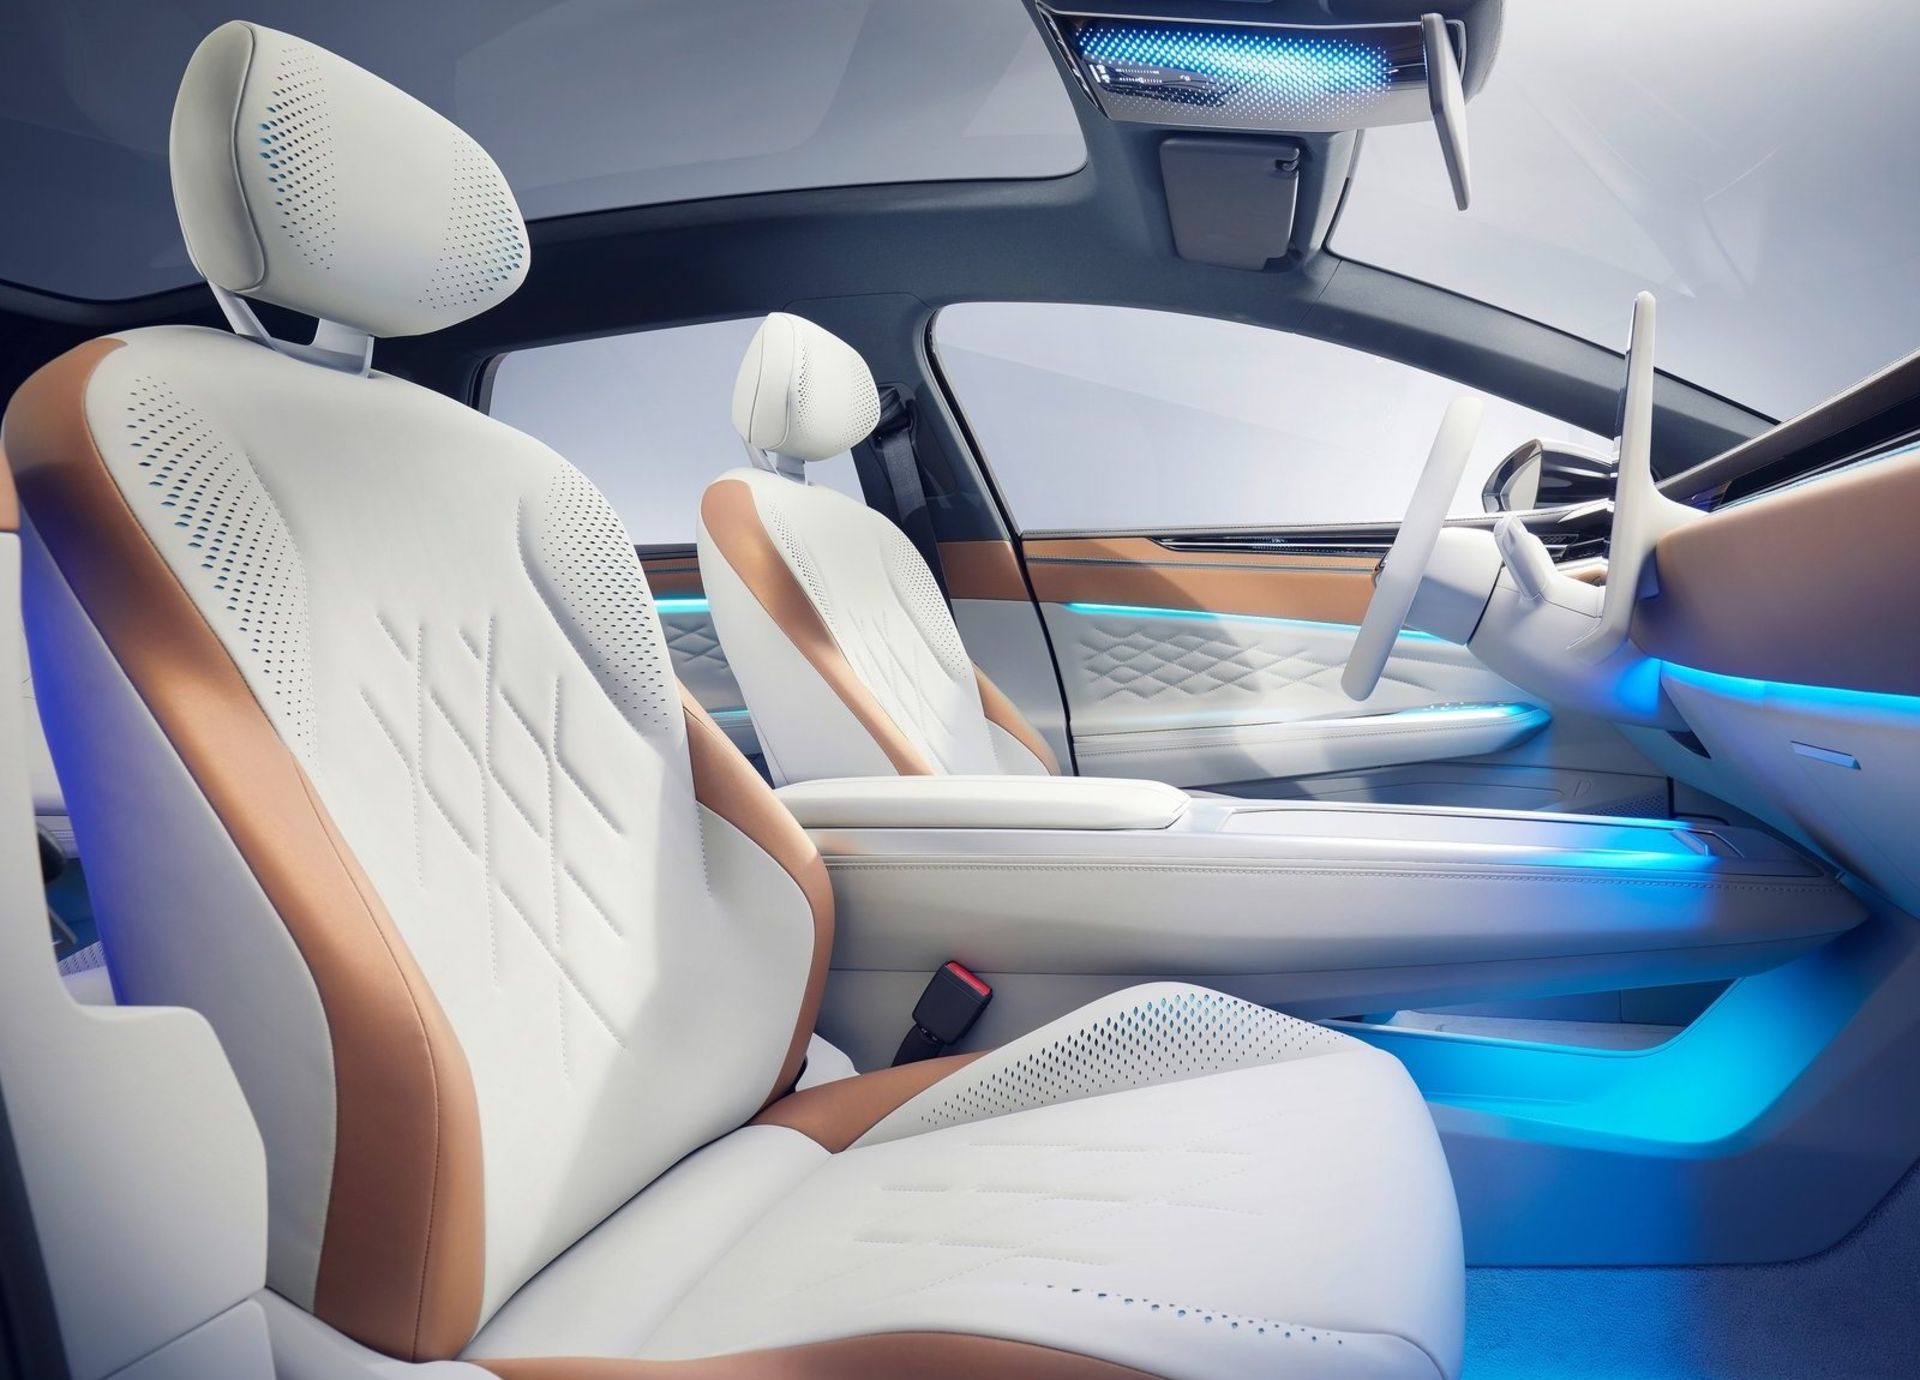 Volkswagen ID Space Vizzion Concept